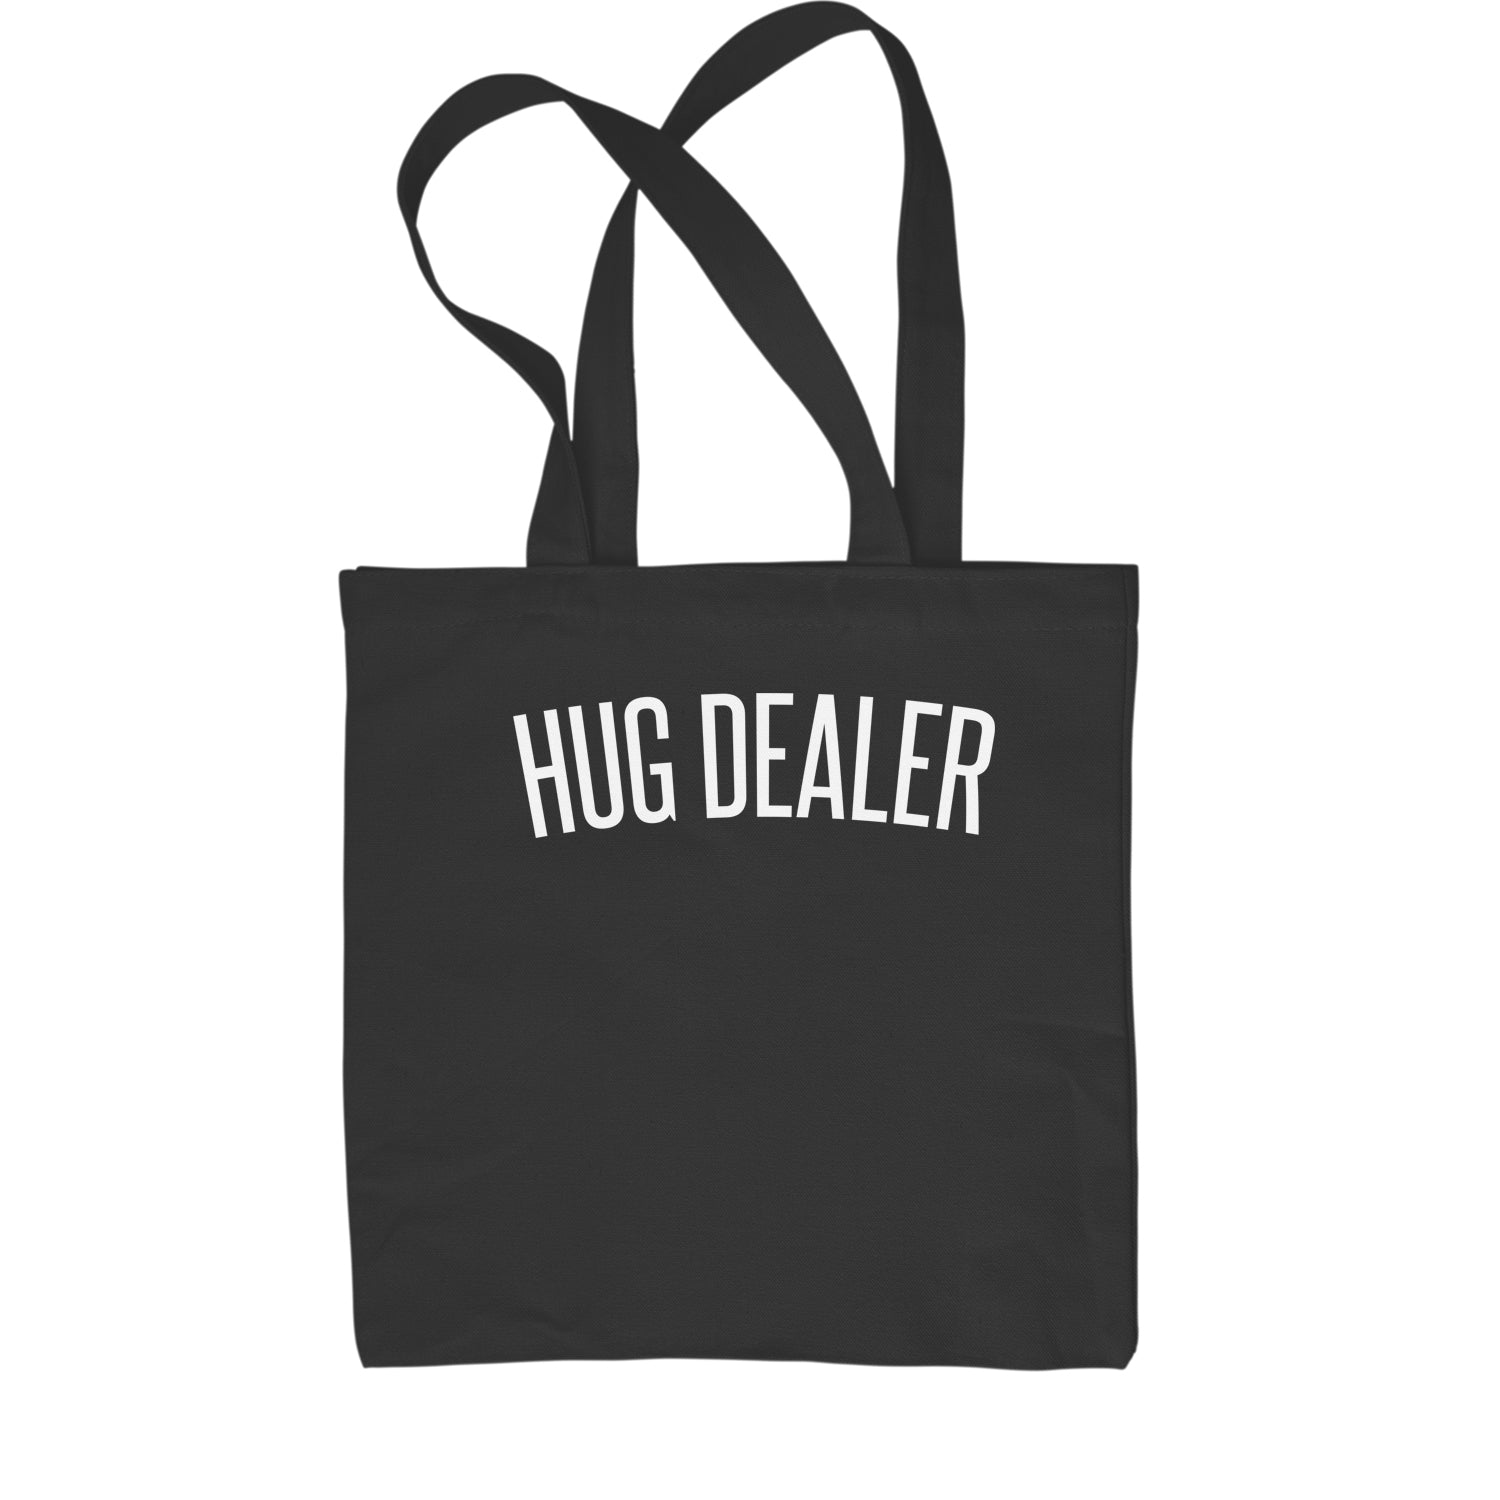 Hug Dealer Shopping Tote Bag dealing, free, hug, hugger, hugs by Expression Tees